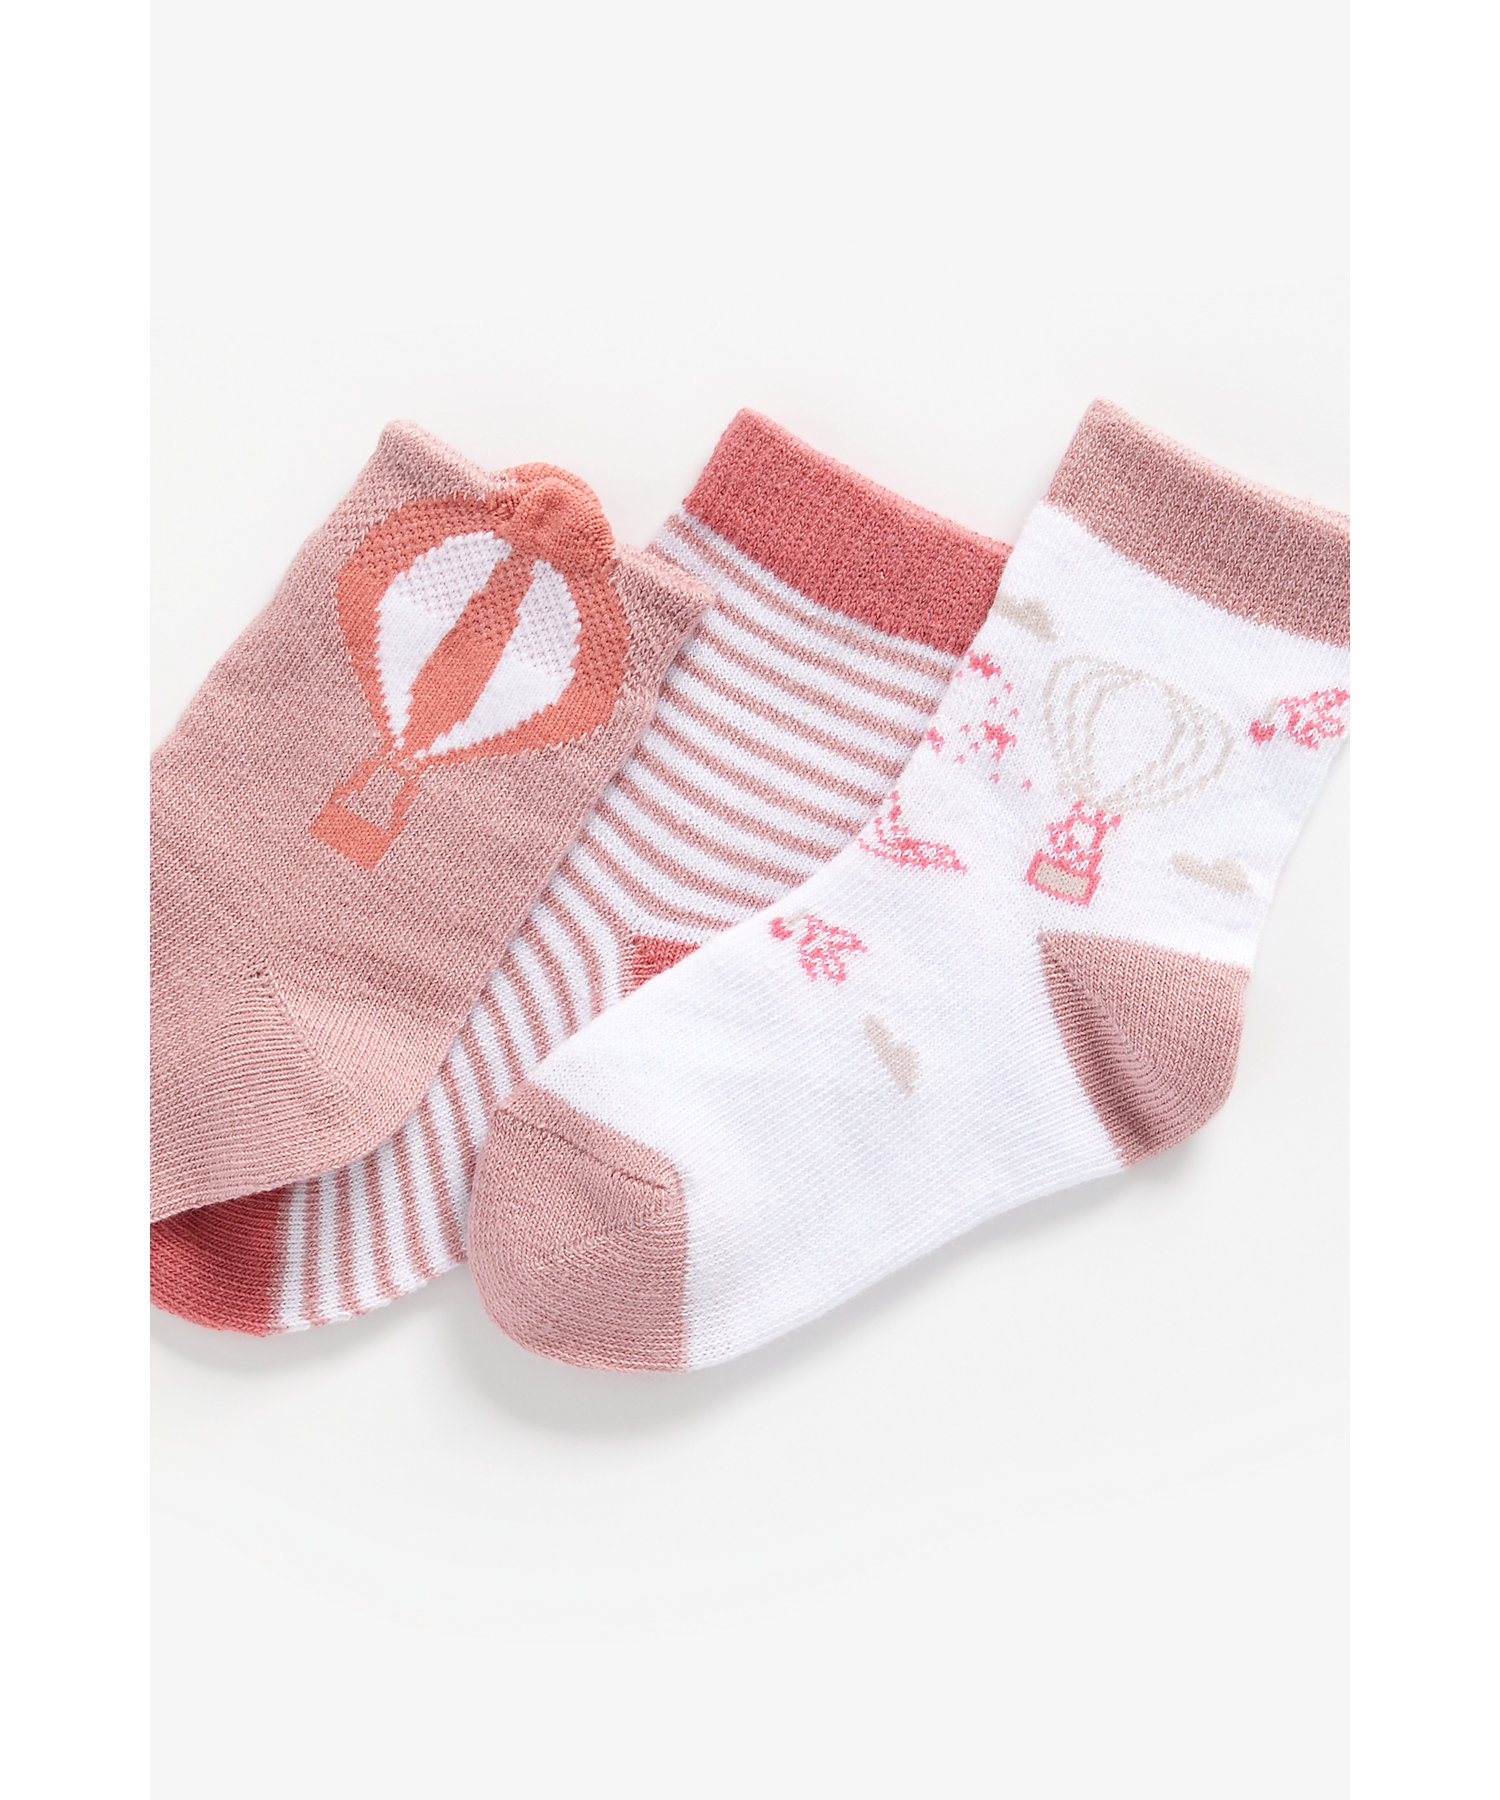 Mothercare | Girls Socks Hot Air Balloon Design - Pack Of 3 - Pink 1